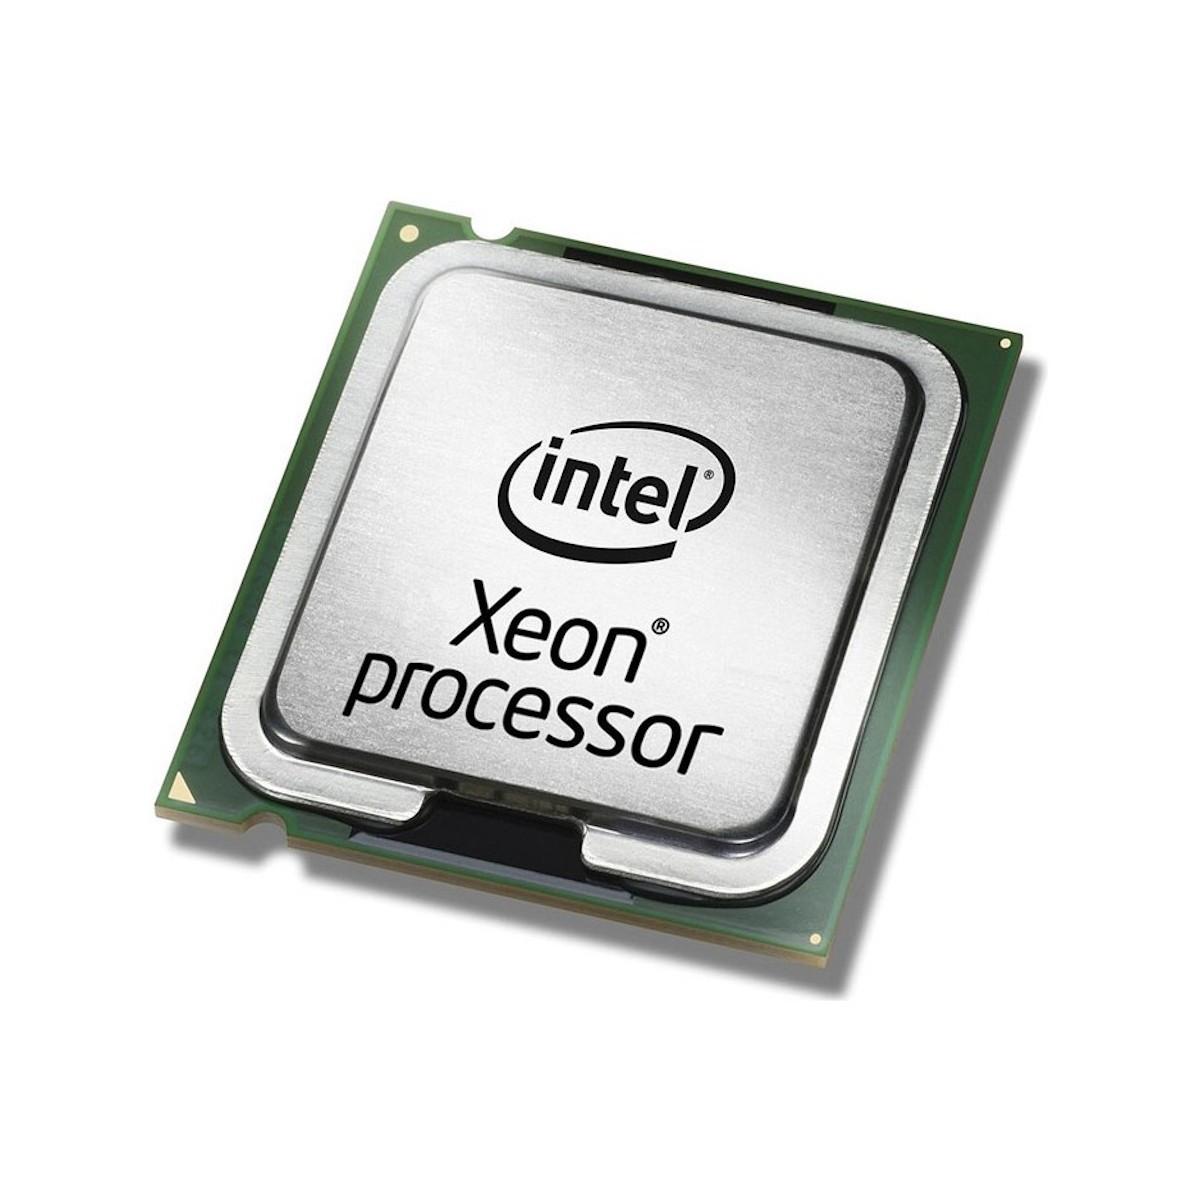 PROCESOR Intel Xeon Processor 5110 2x1.6GHz SL9RZ